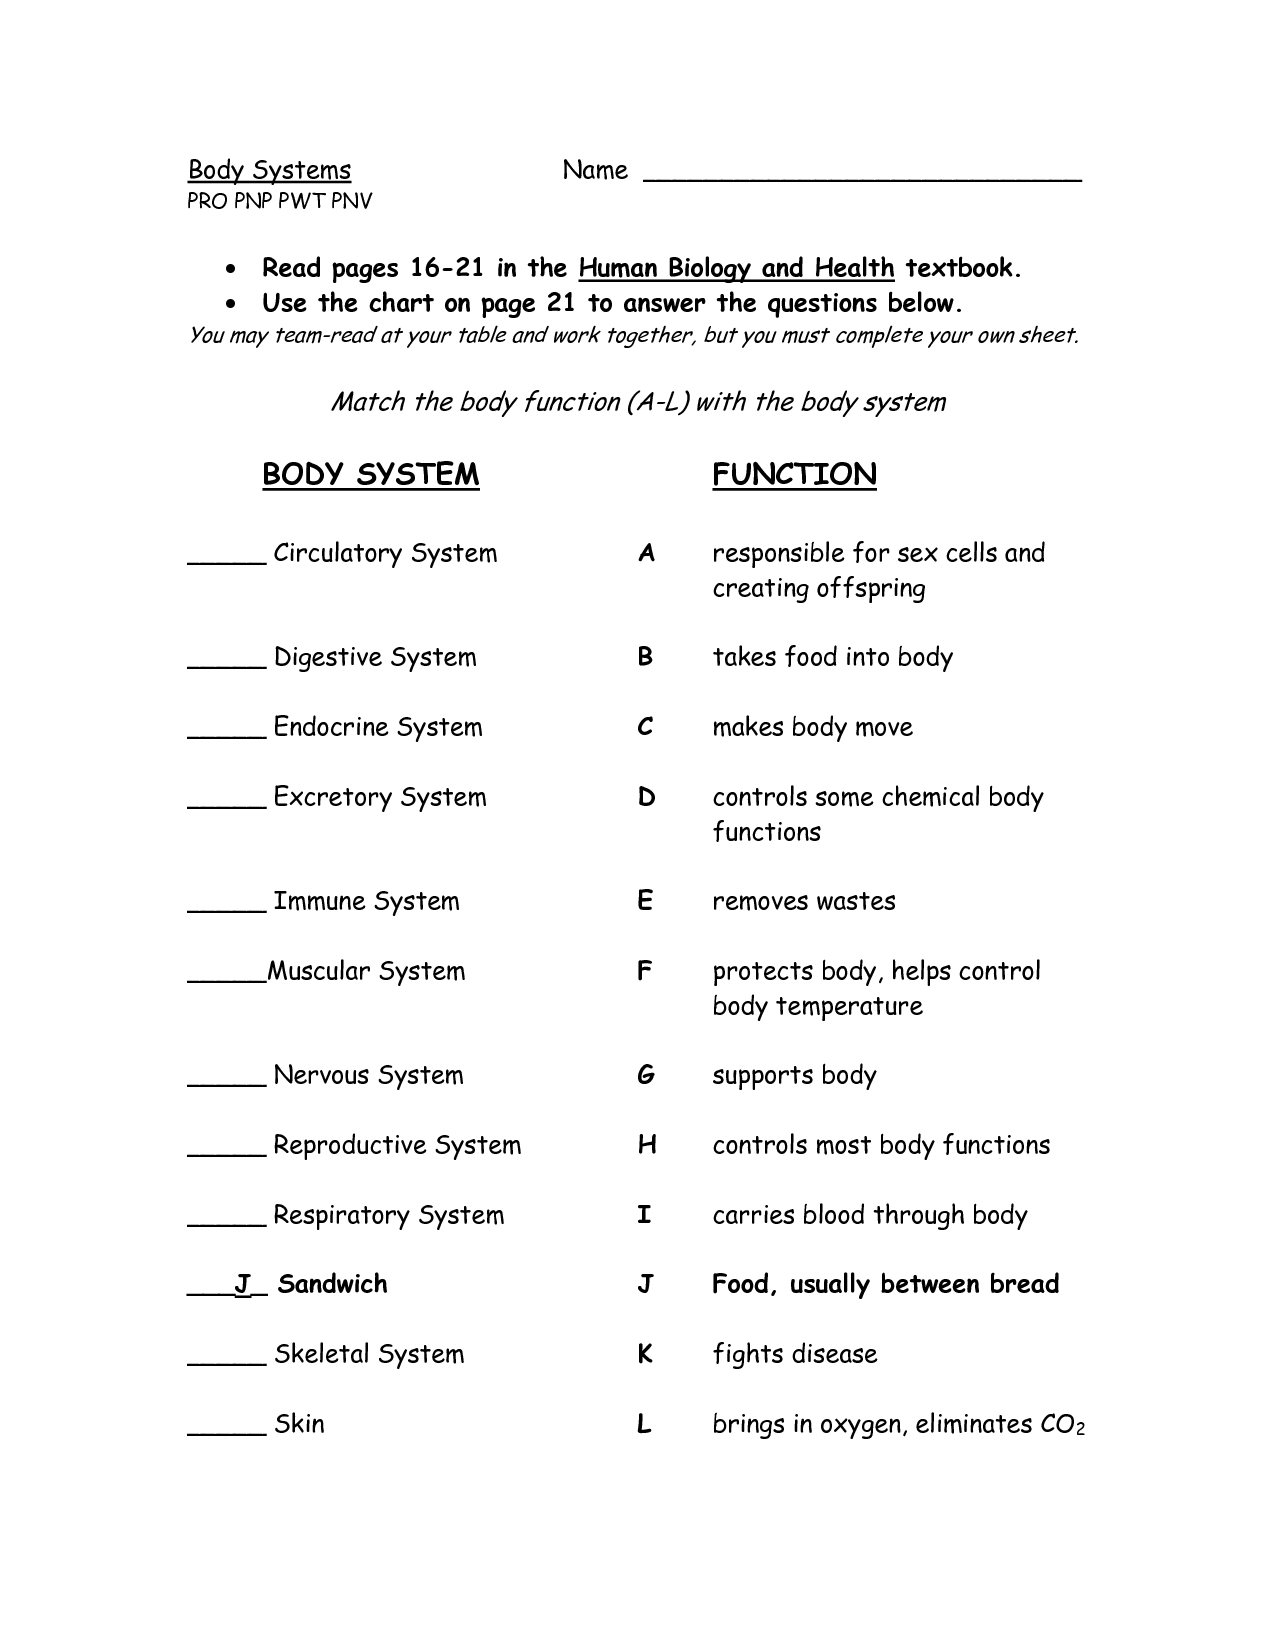 body-systems-matching-worksheet-answer-key